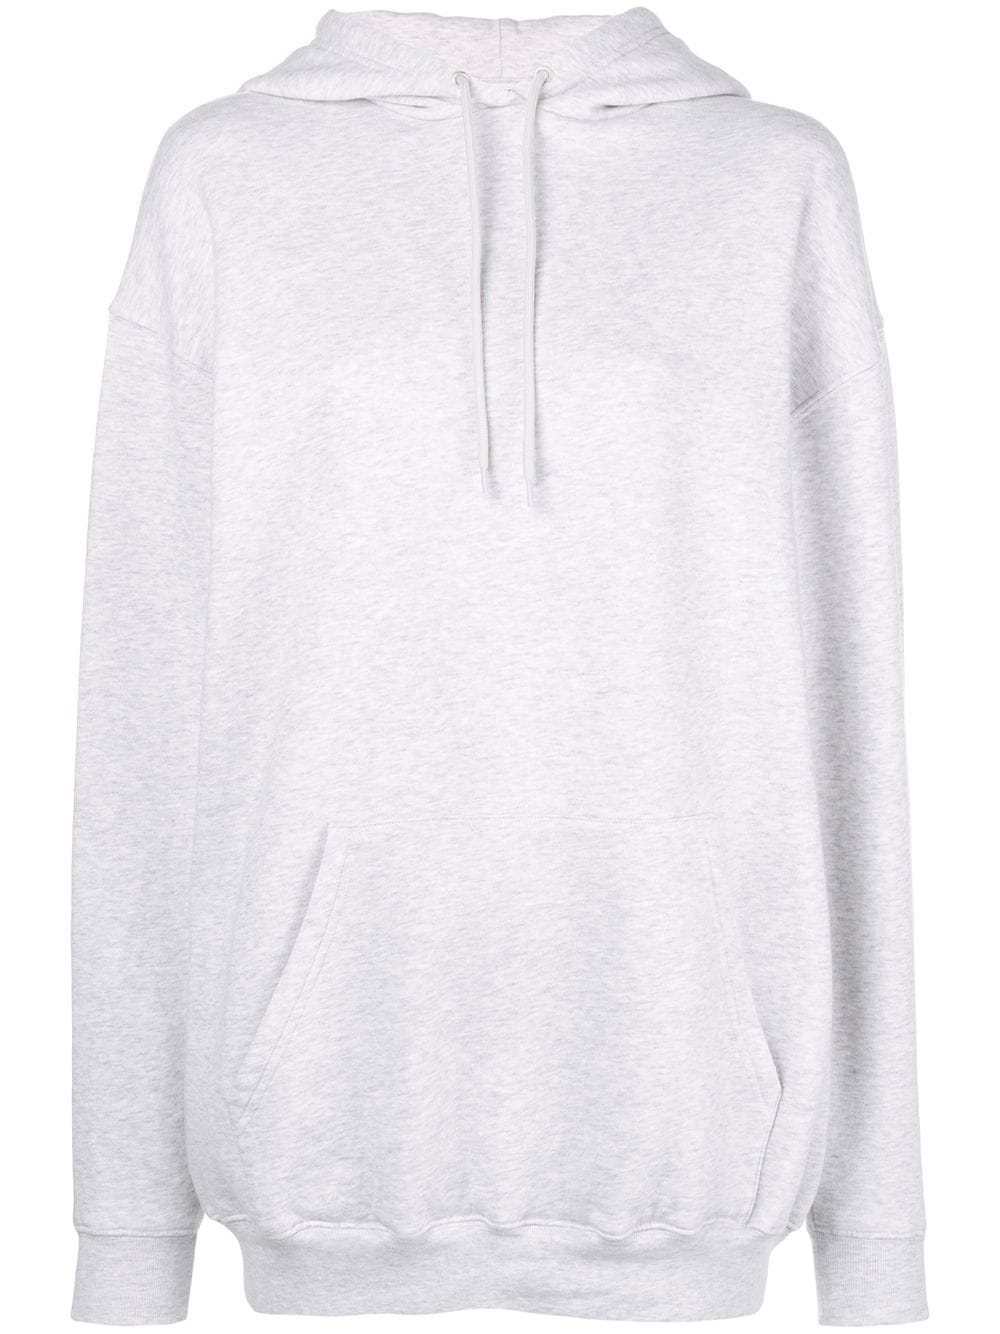 Hood Clothing Logo - Balenciaga logo hood hoodie $895 SS19 Online Delivery